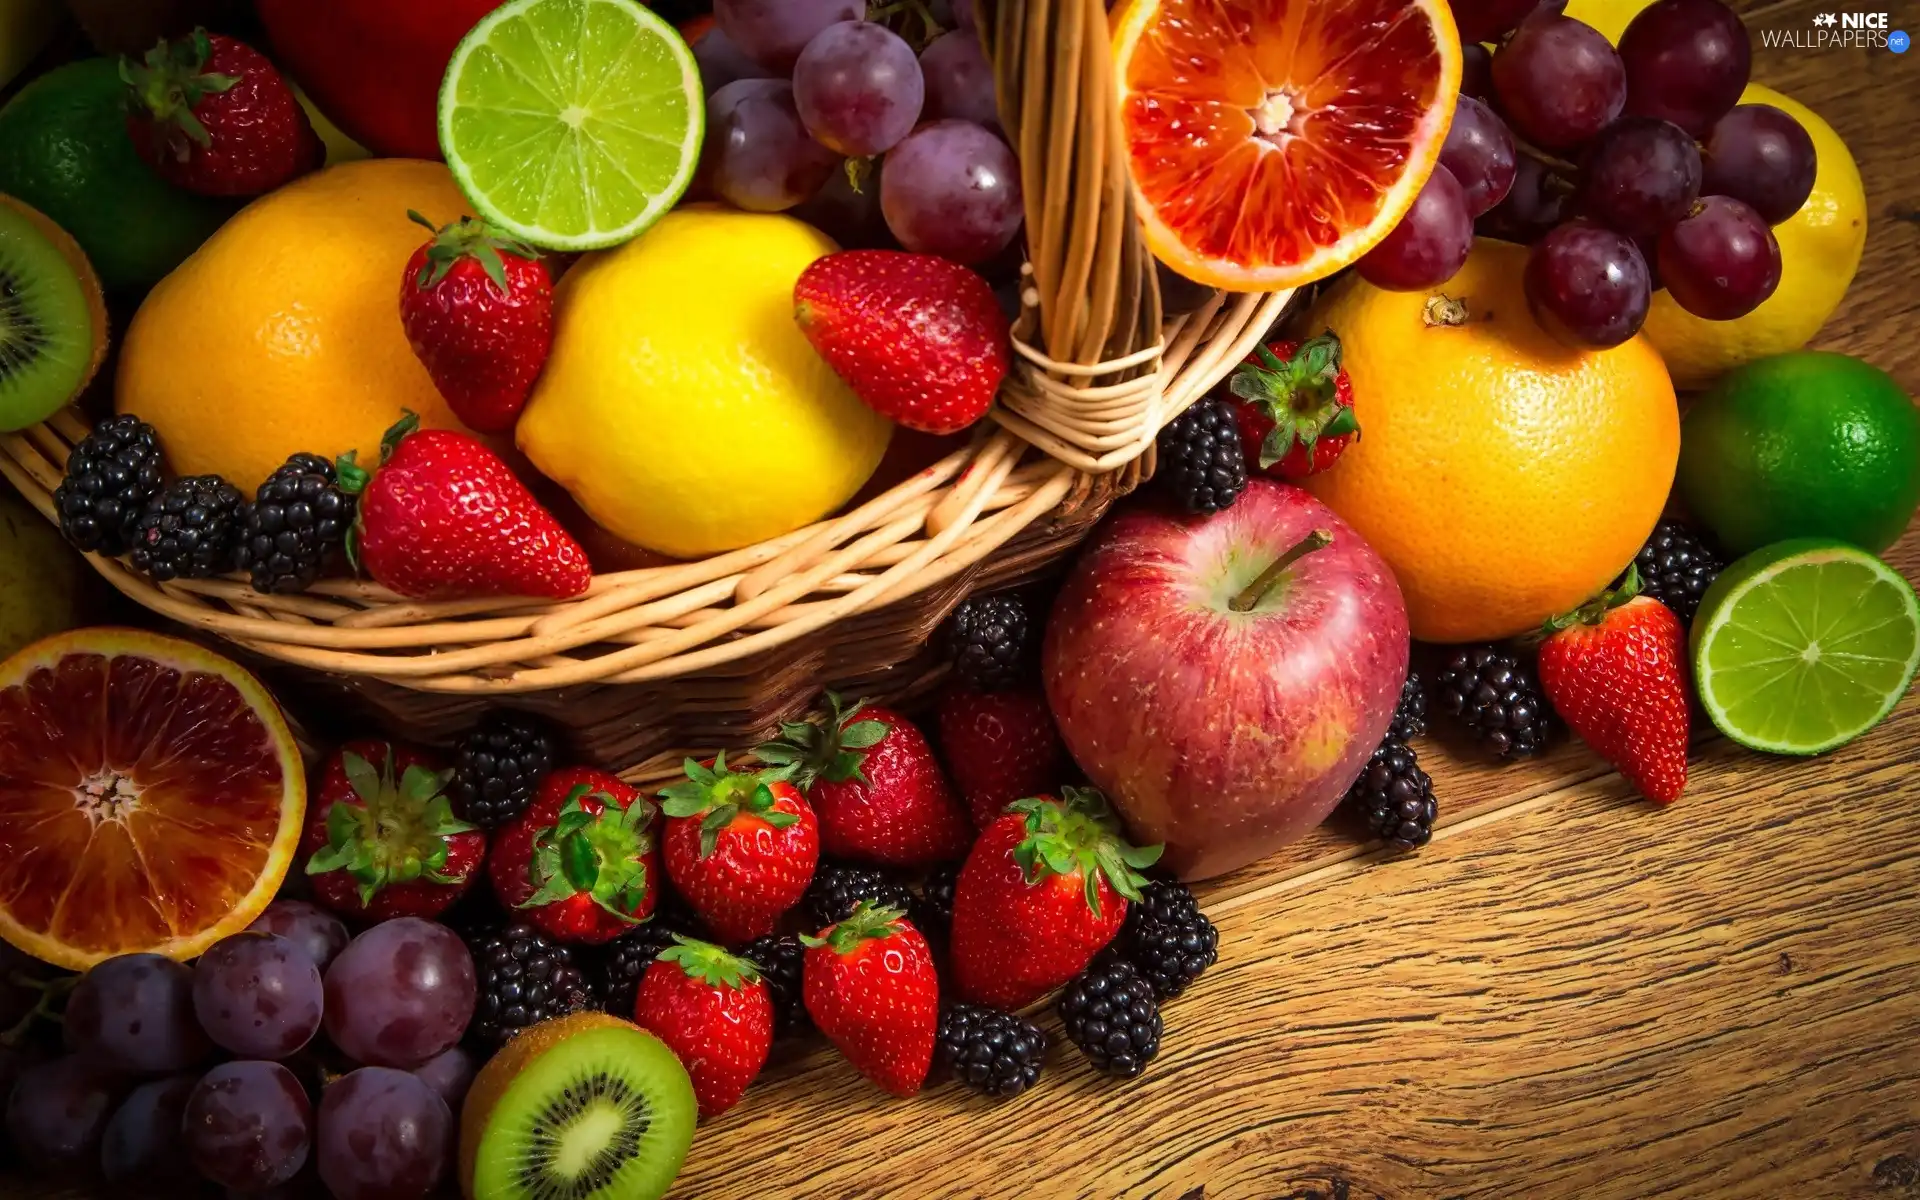 strawberries, blackberries, kiwi, Grapes, Apple, Fruits, basket, lemons